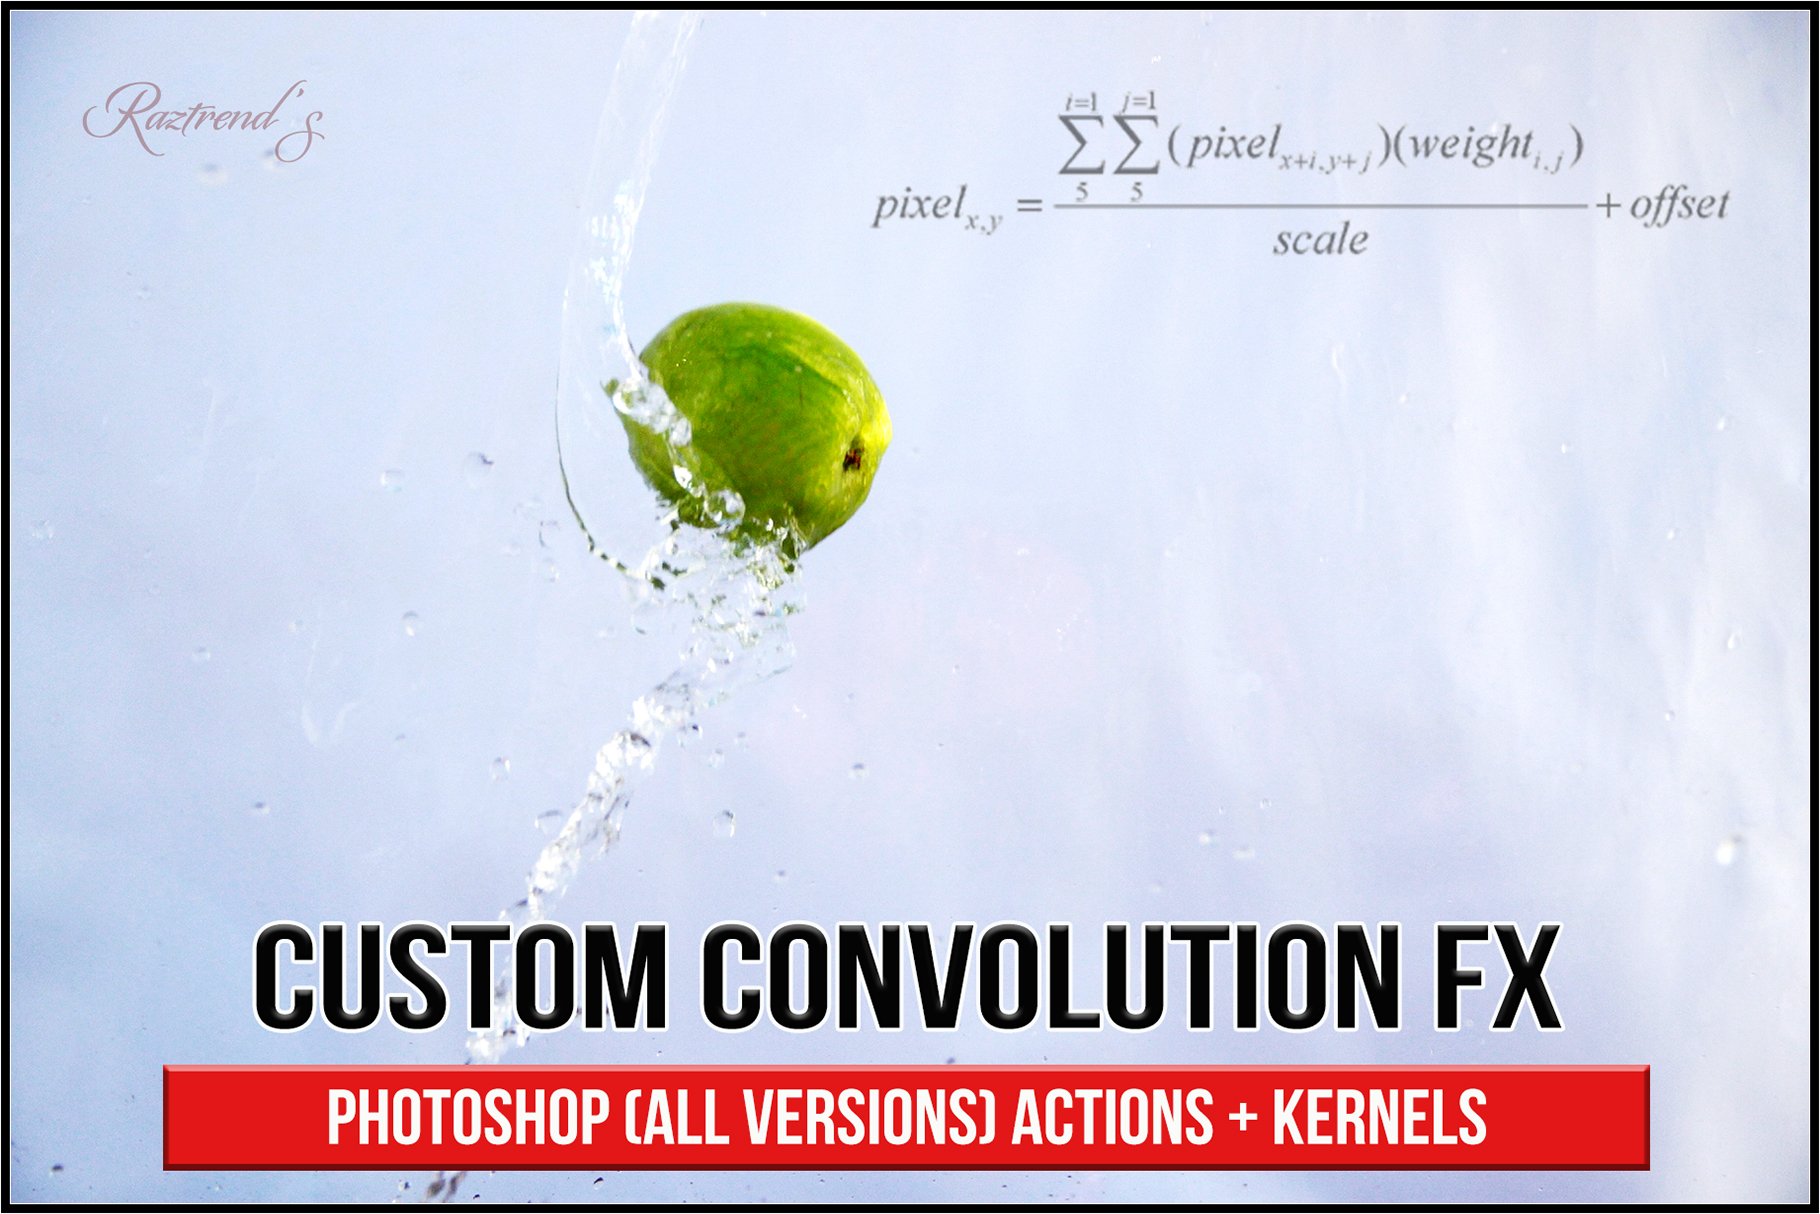 Custom Convolution FX actions Vol. 1cover image.